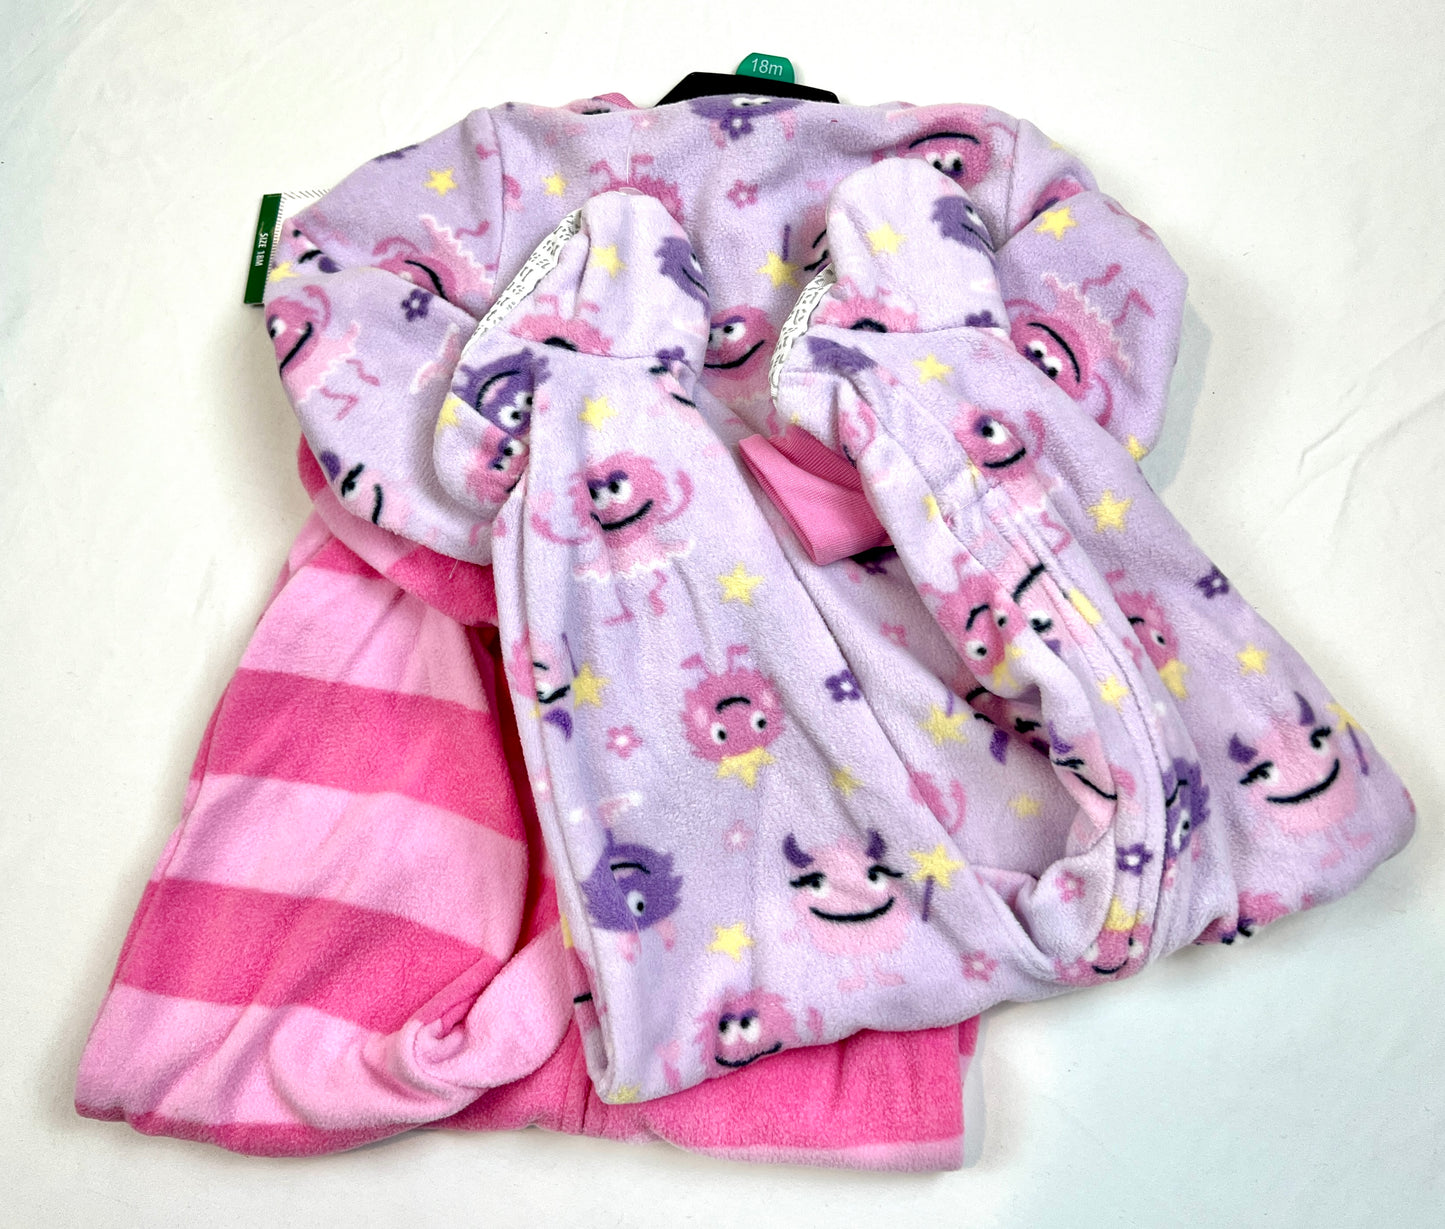 Girls 18M (2) NEW NWT Fleece Footed Jammies PJ's Pajamas Sleeper Pink Purple Monster Stripe